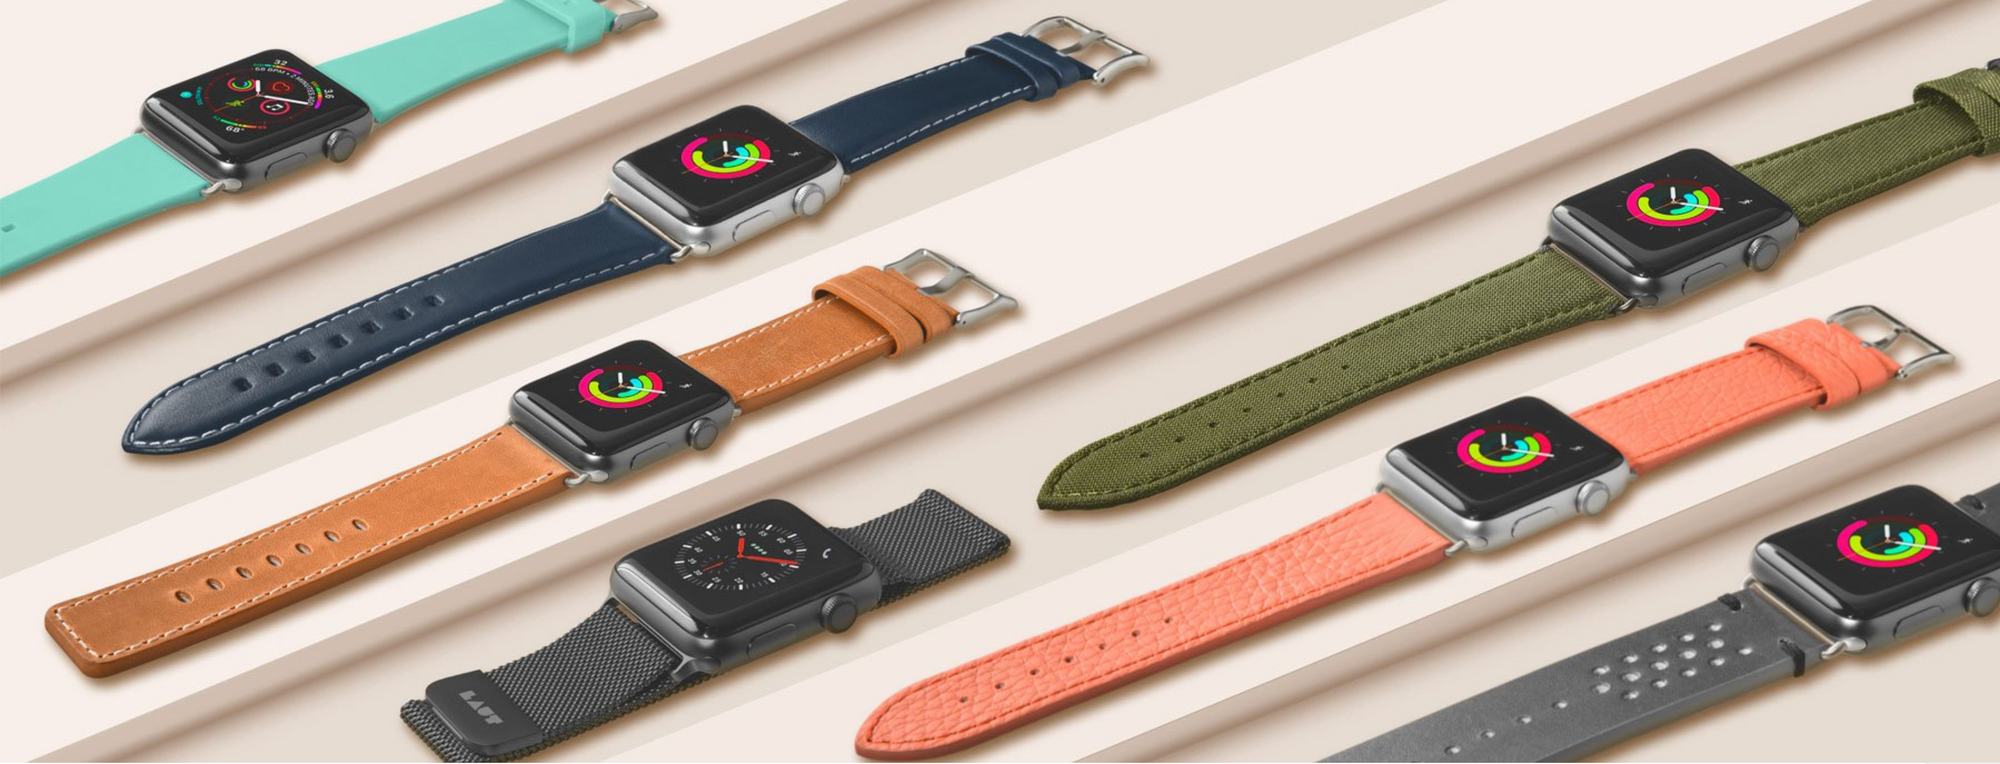 LAUT - German Designed Apple Watch Bands